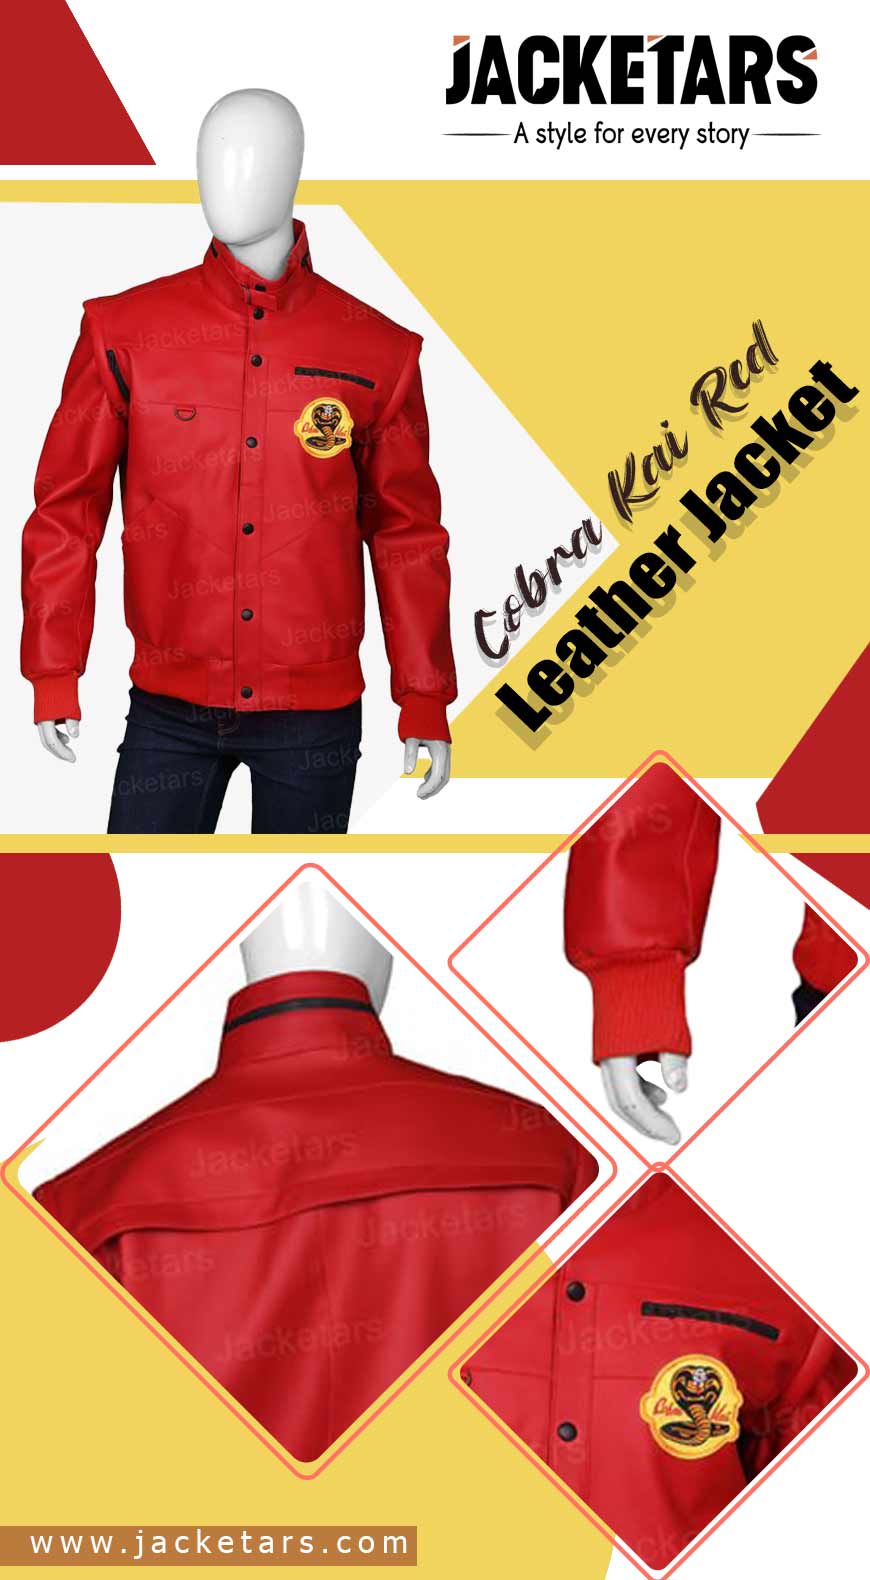 Cobra Kai Red Leather Jacket